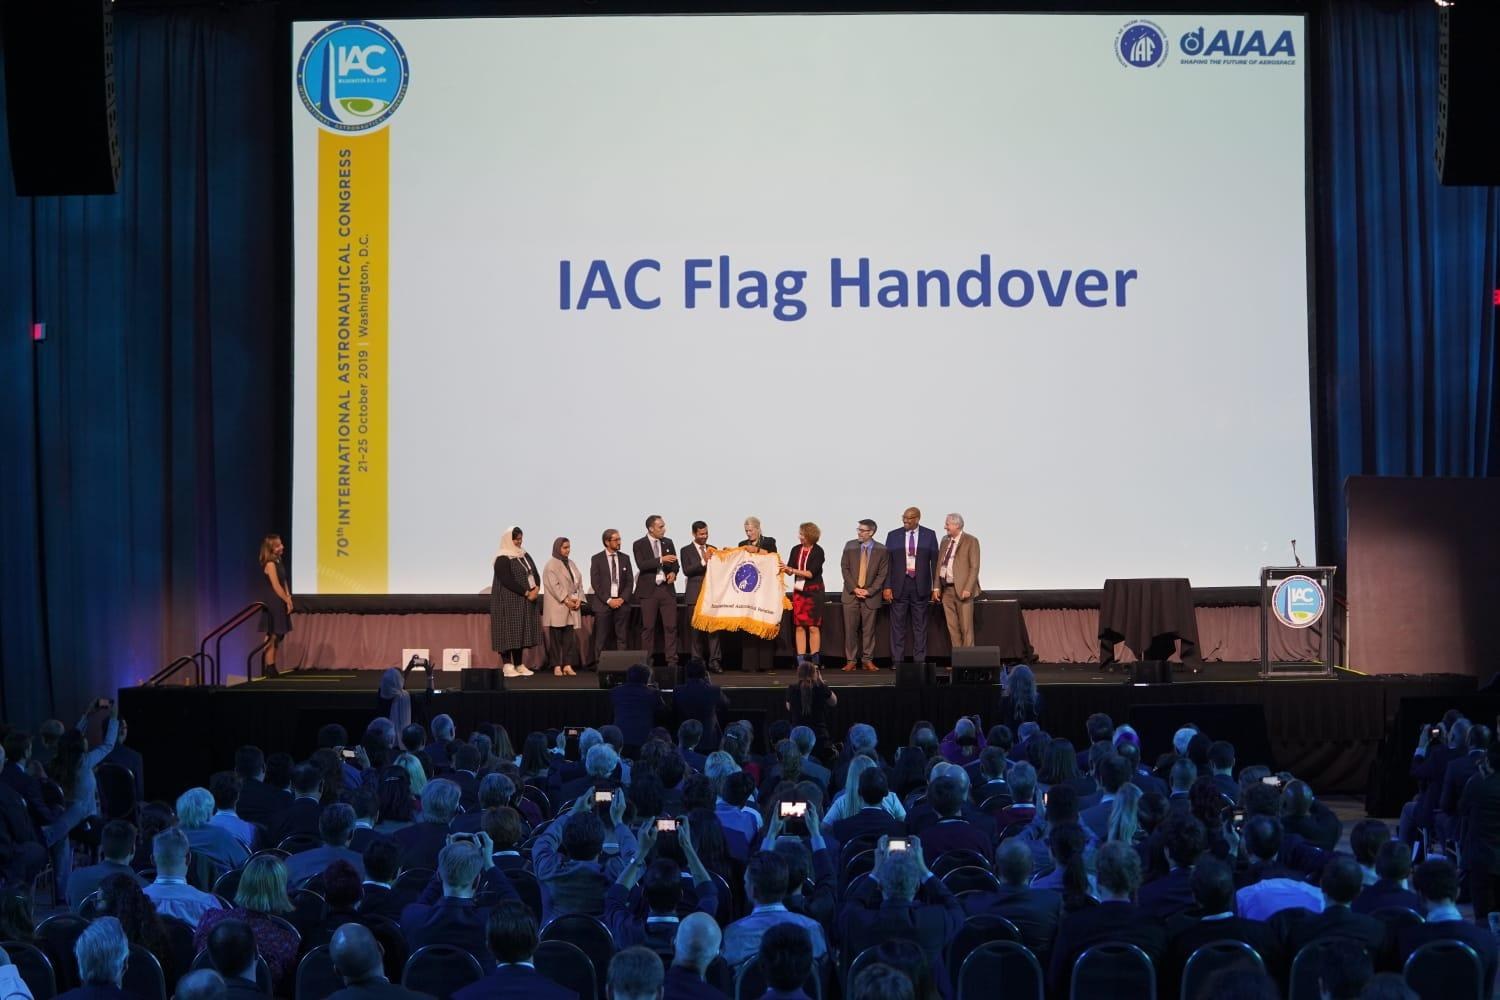 IAC Flag Handover – Der Kongress 2020 findet in Dubai statt